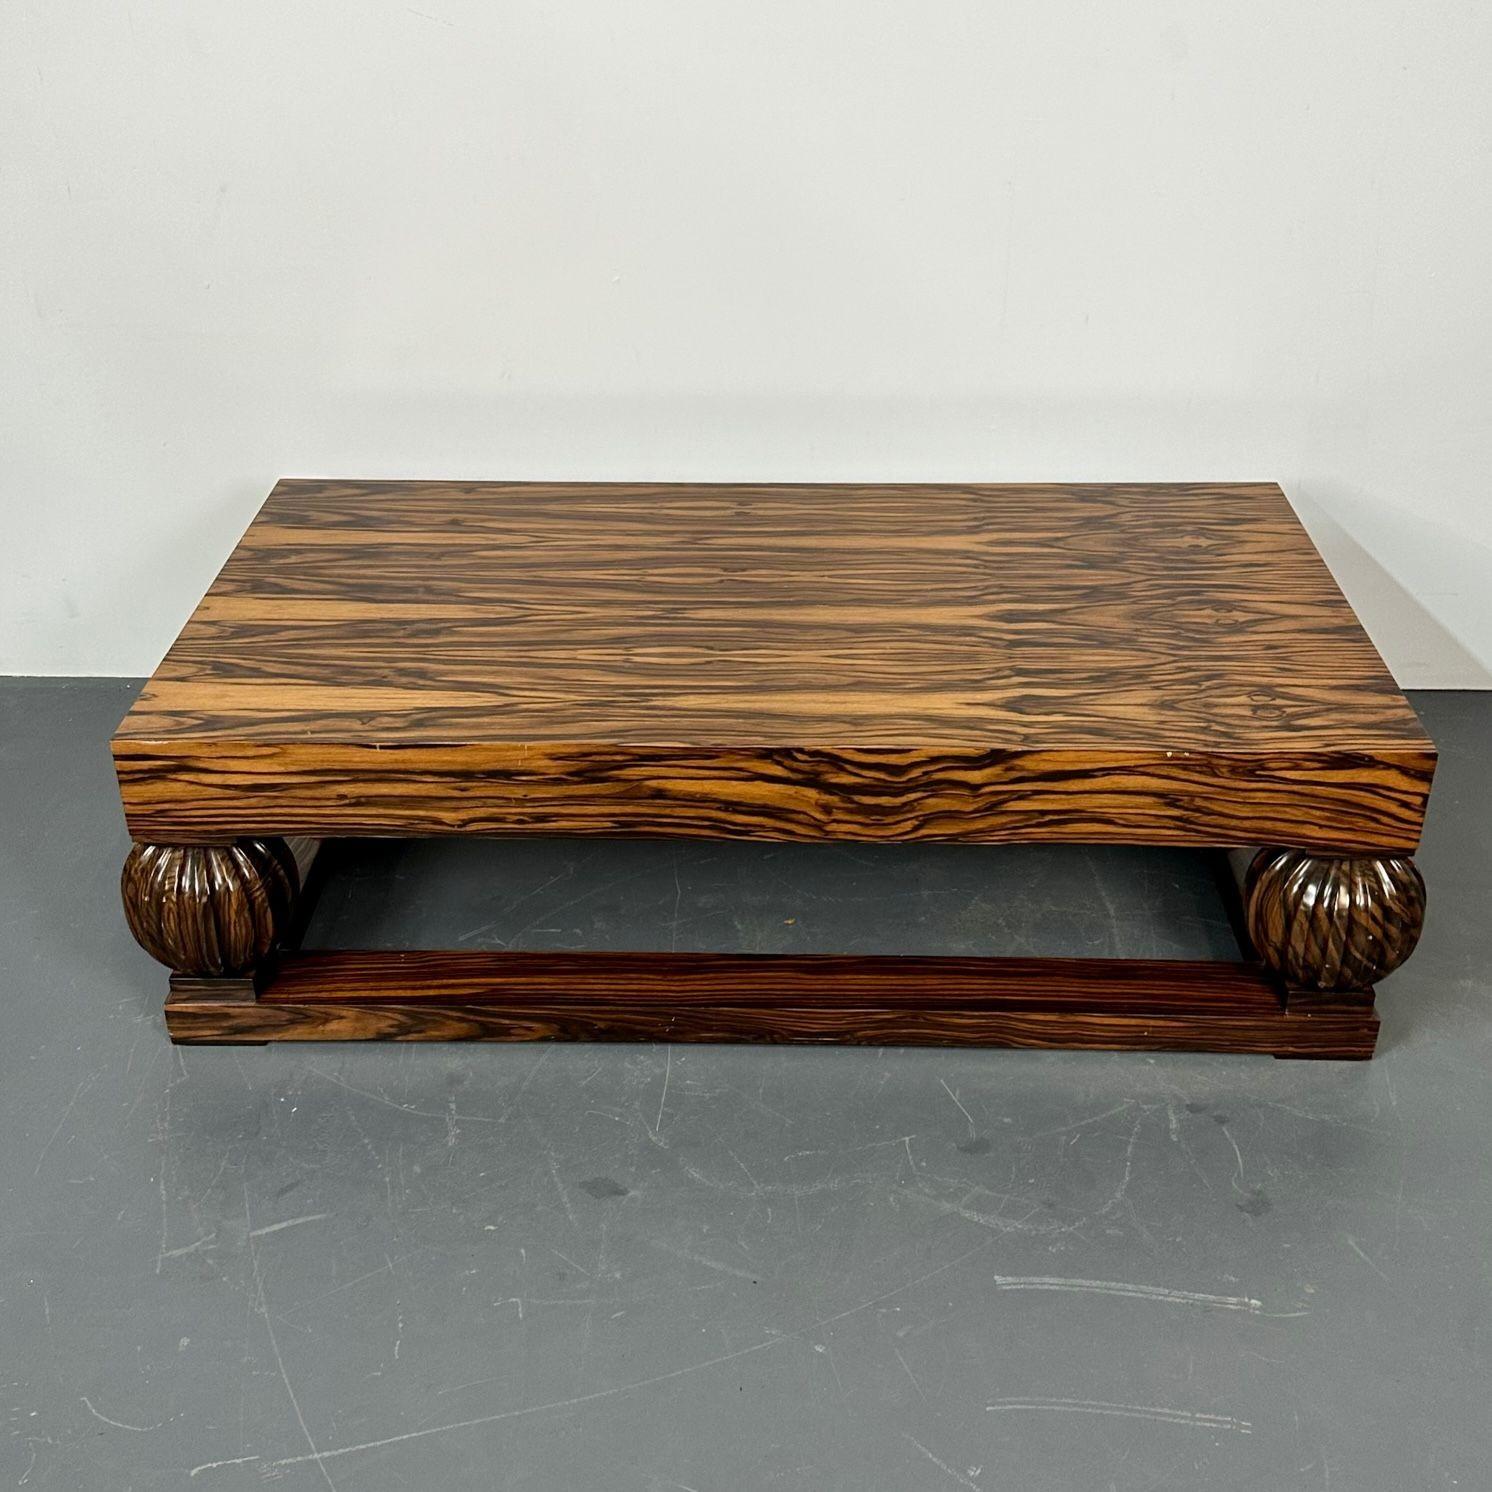 Émile-Jacques Ruhlmann French Art Deco Style Rectangular Coffee Table, Macassar Ebony
Low table is the style of Émile-Jacques Ruhlman's 